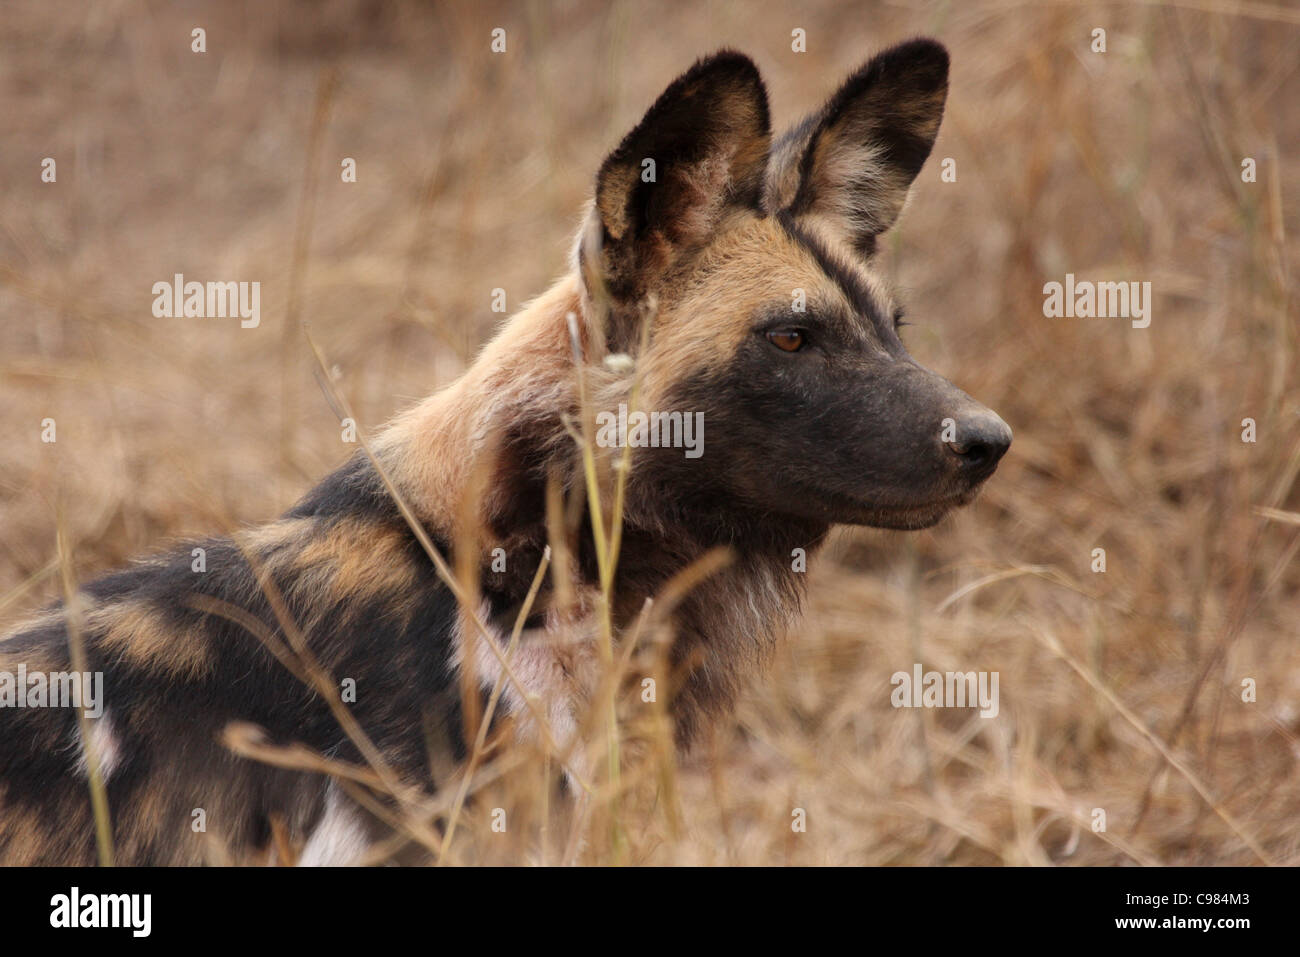 Wild dog portrait Stock Photo